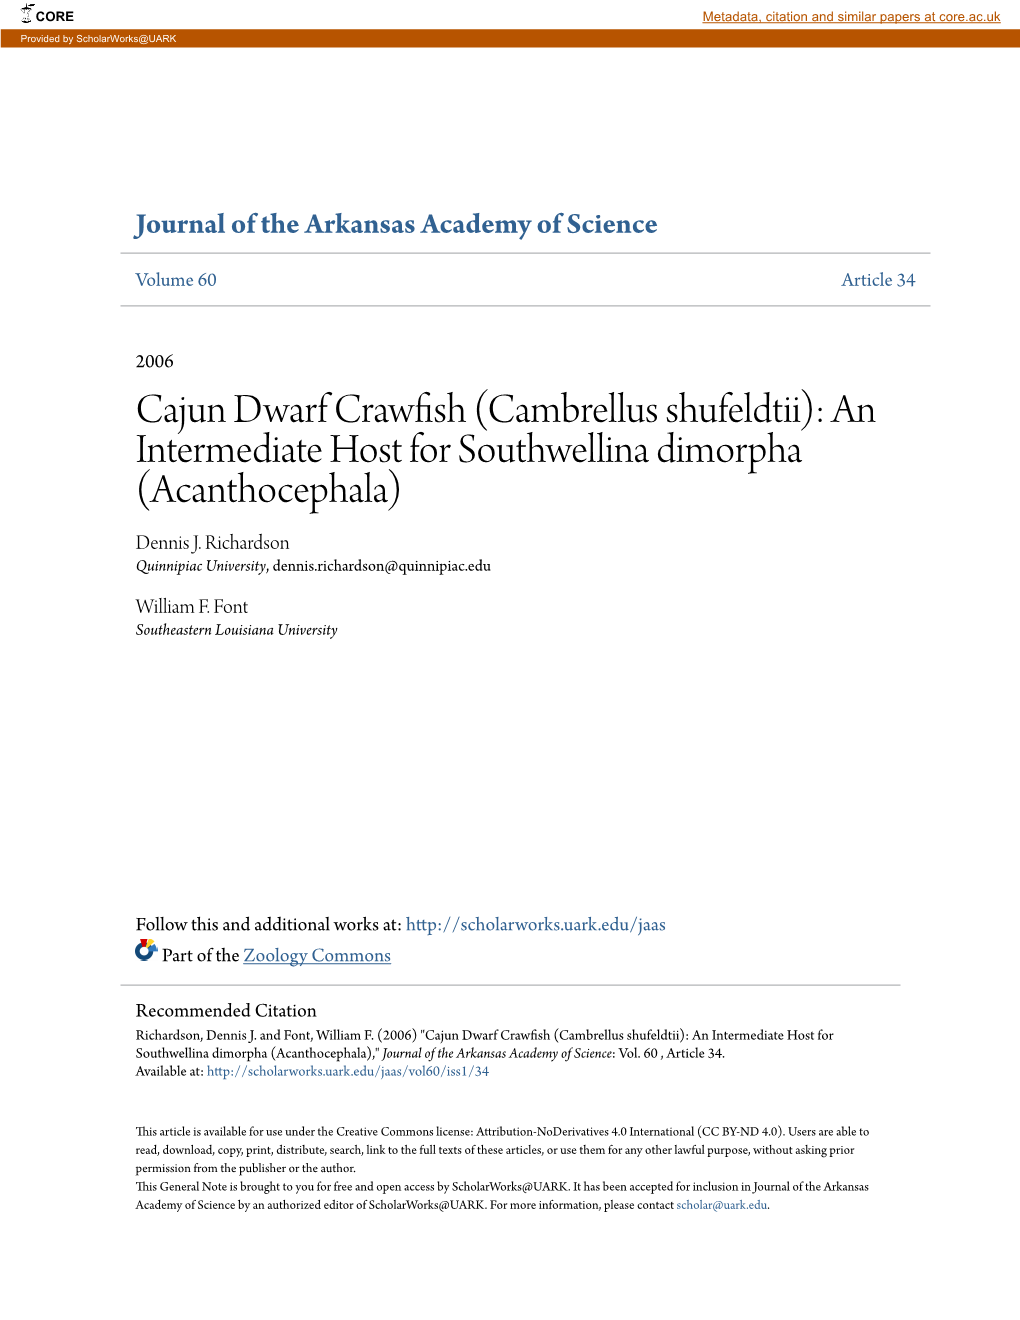 Cajun Dwarf Crawfish (Cambrellus Shufeldtii): an Intermediate Host for Southwellina Dimorpha (Acanthocephala) Dennis J